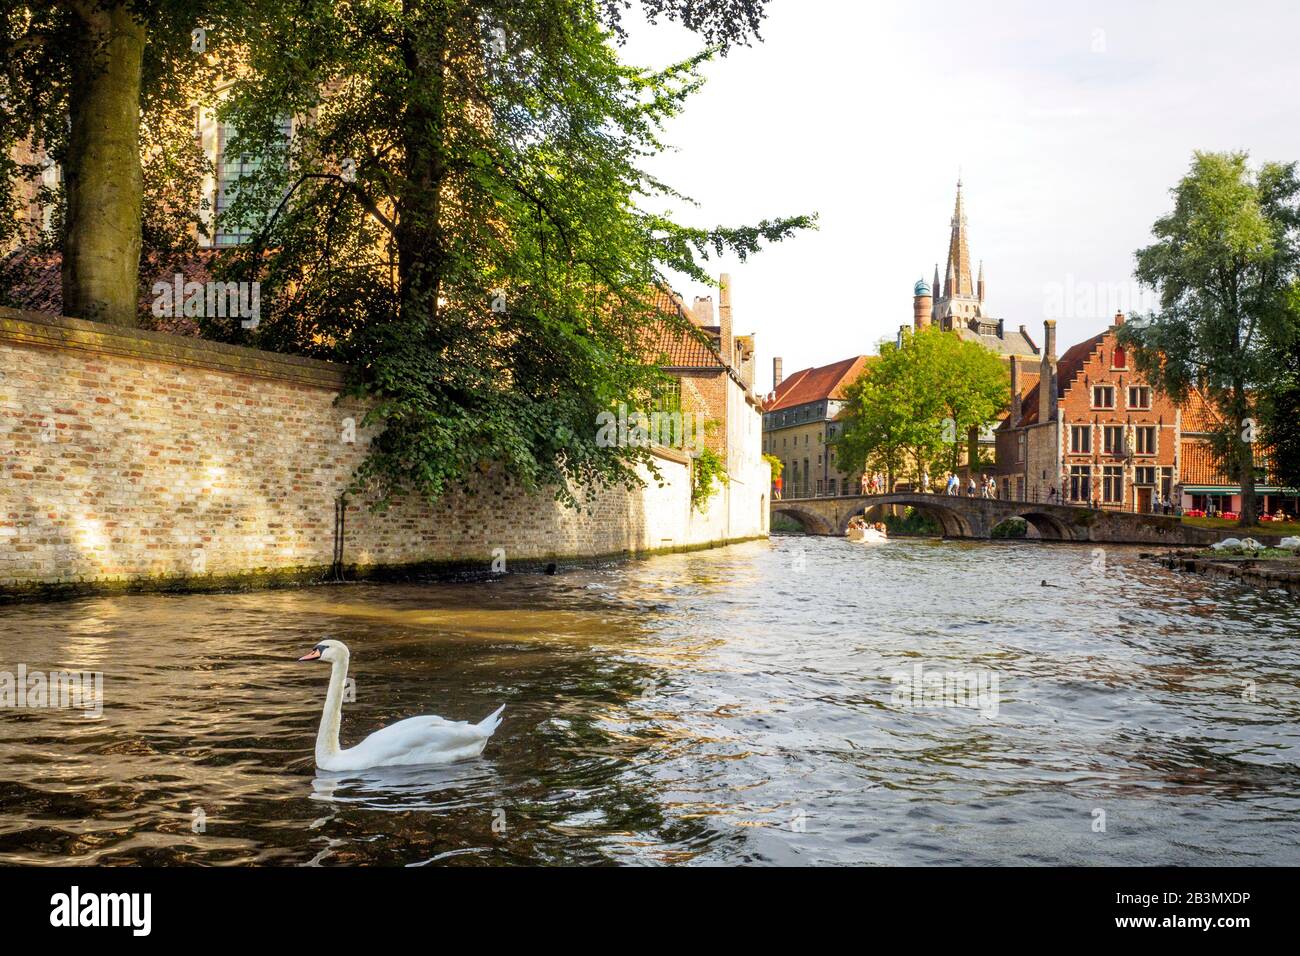 Un cigno in un canale di Bruges e la Chiesa di Nostra Signora (Onze-lieve-Vrouwekerk) in background - Bruges, Belgio Foto Stock